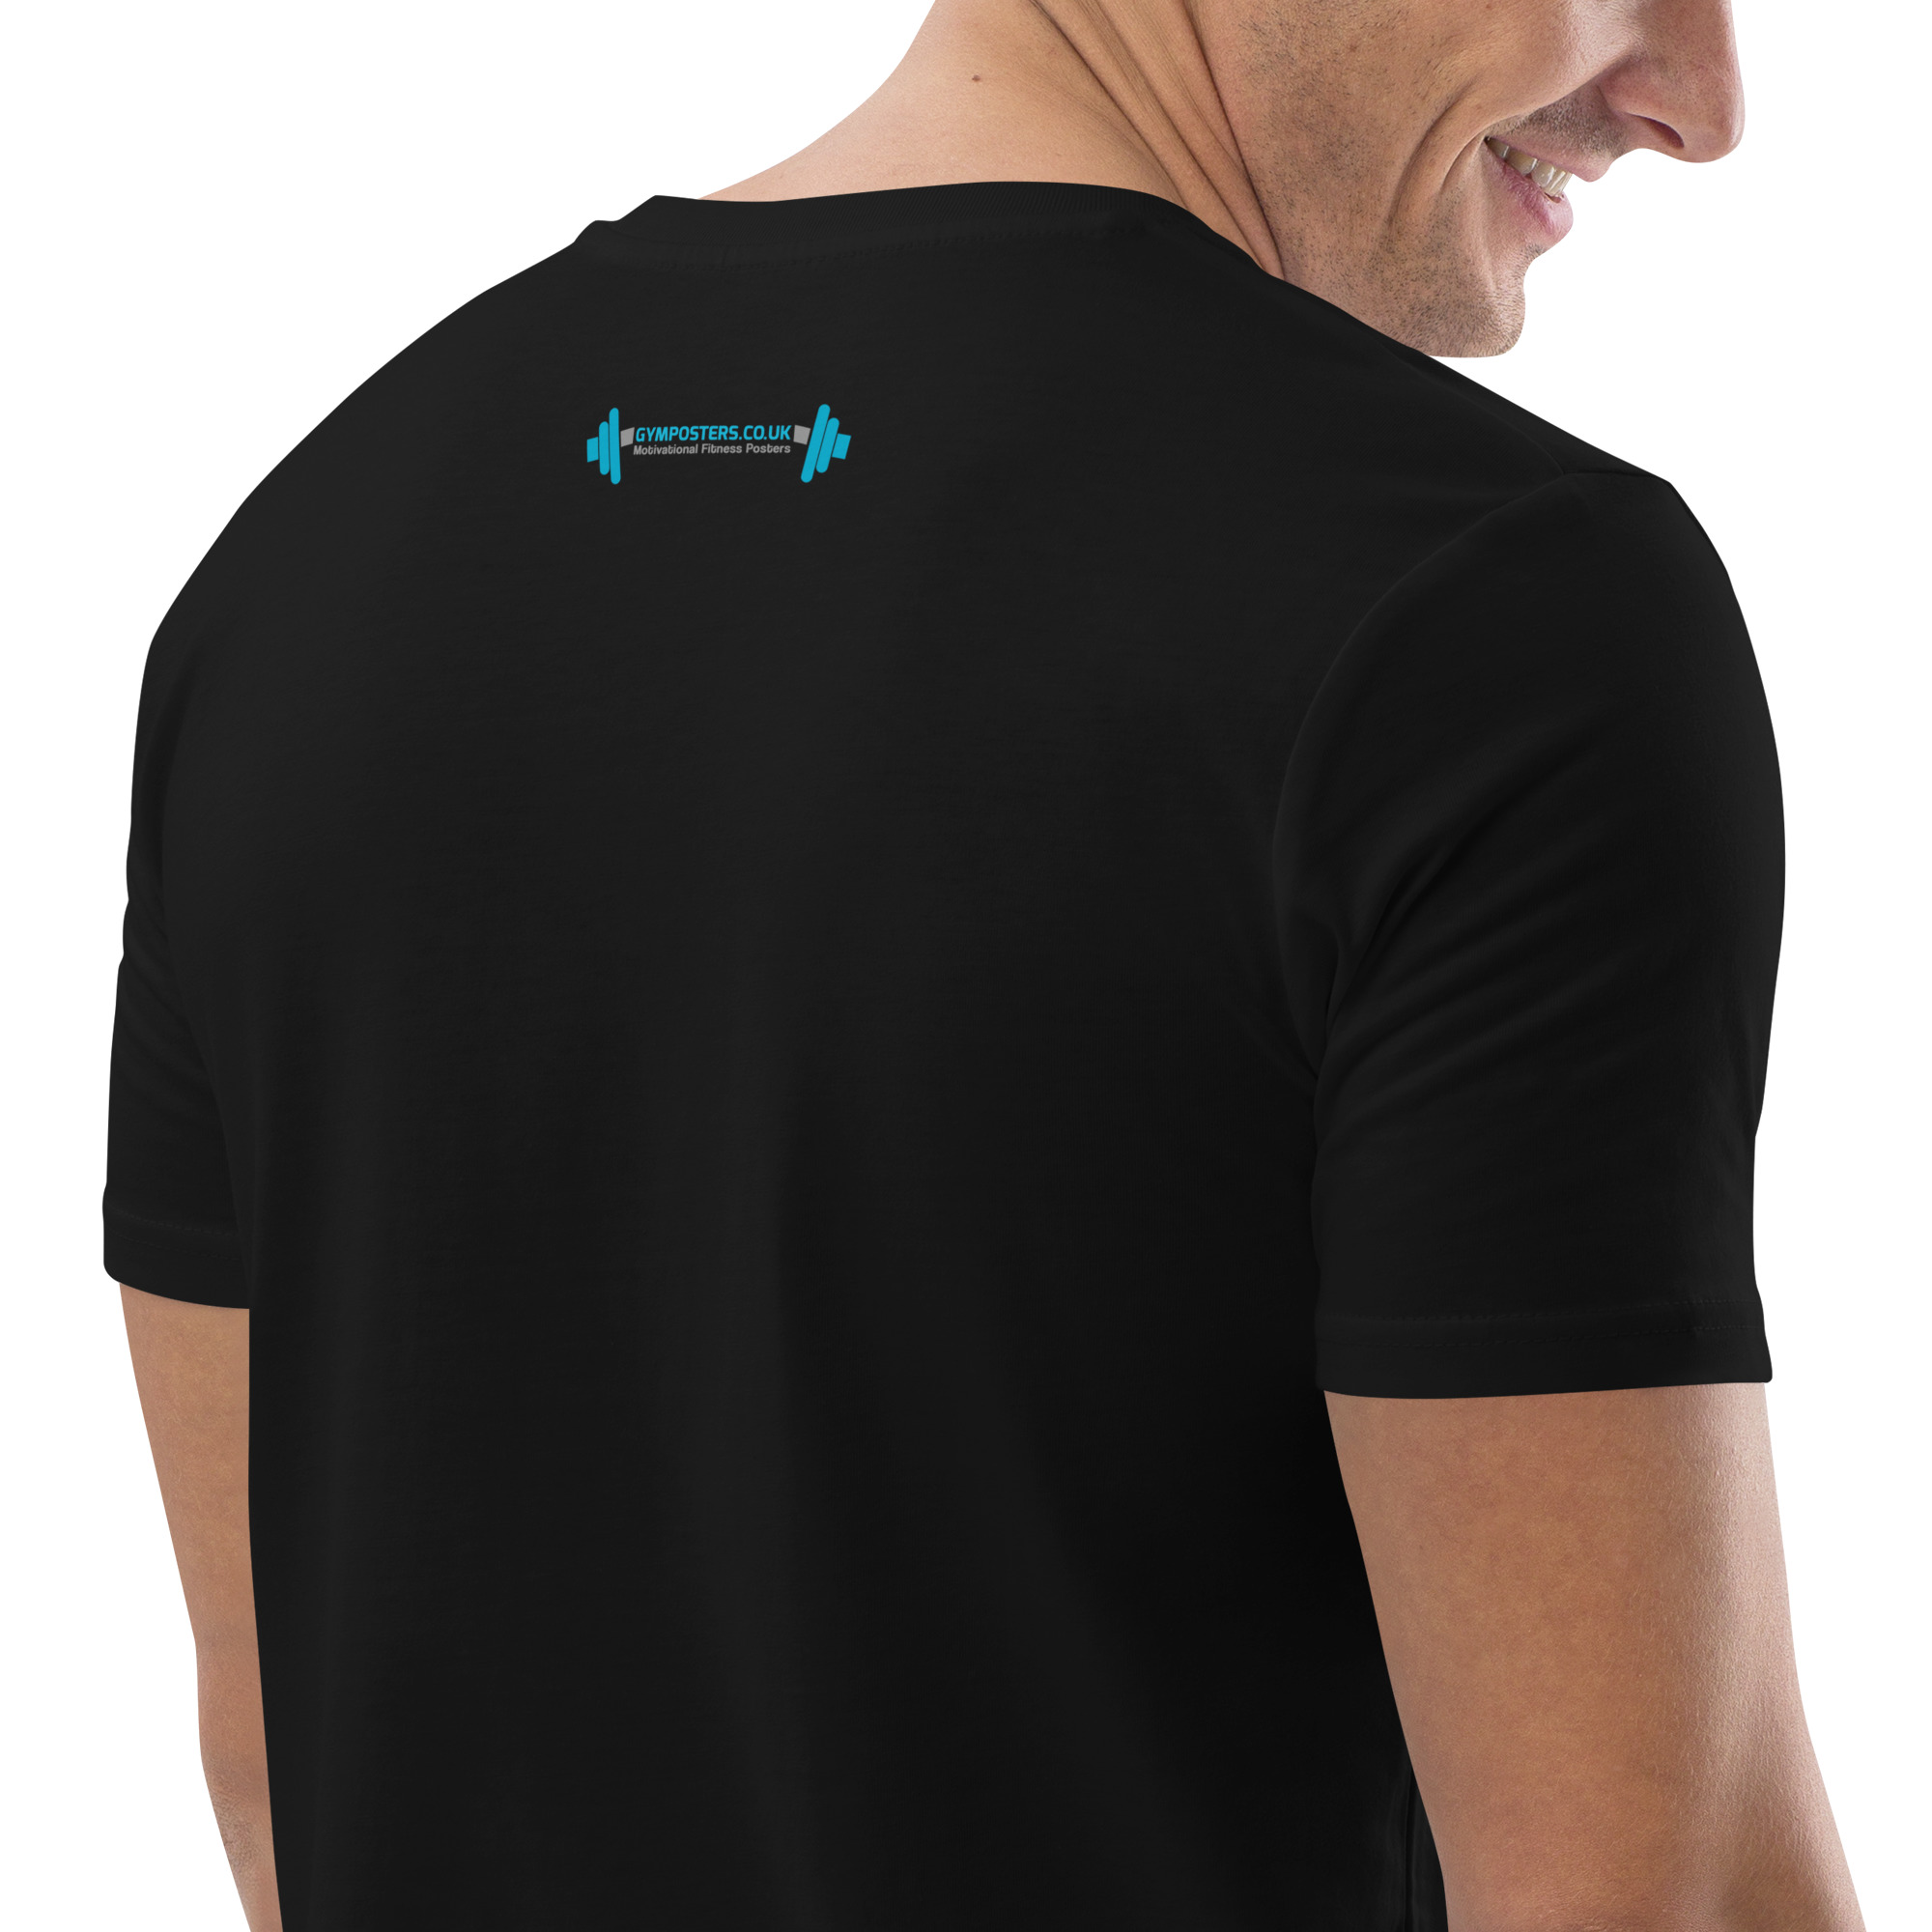 unisex-organic-cotton-t-shirt-black-zoomed-in-3-6578590ca7ec4.jpg